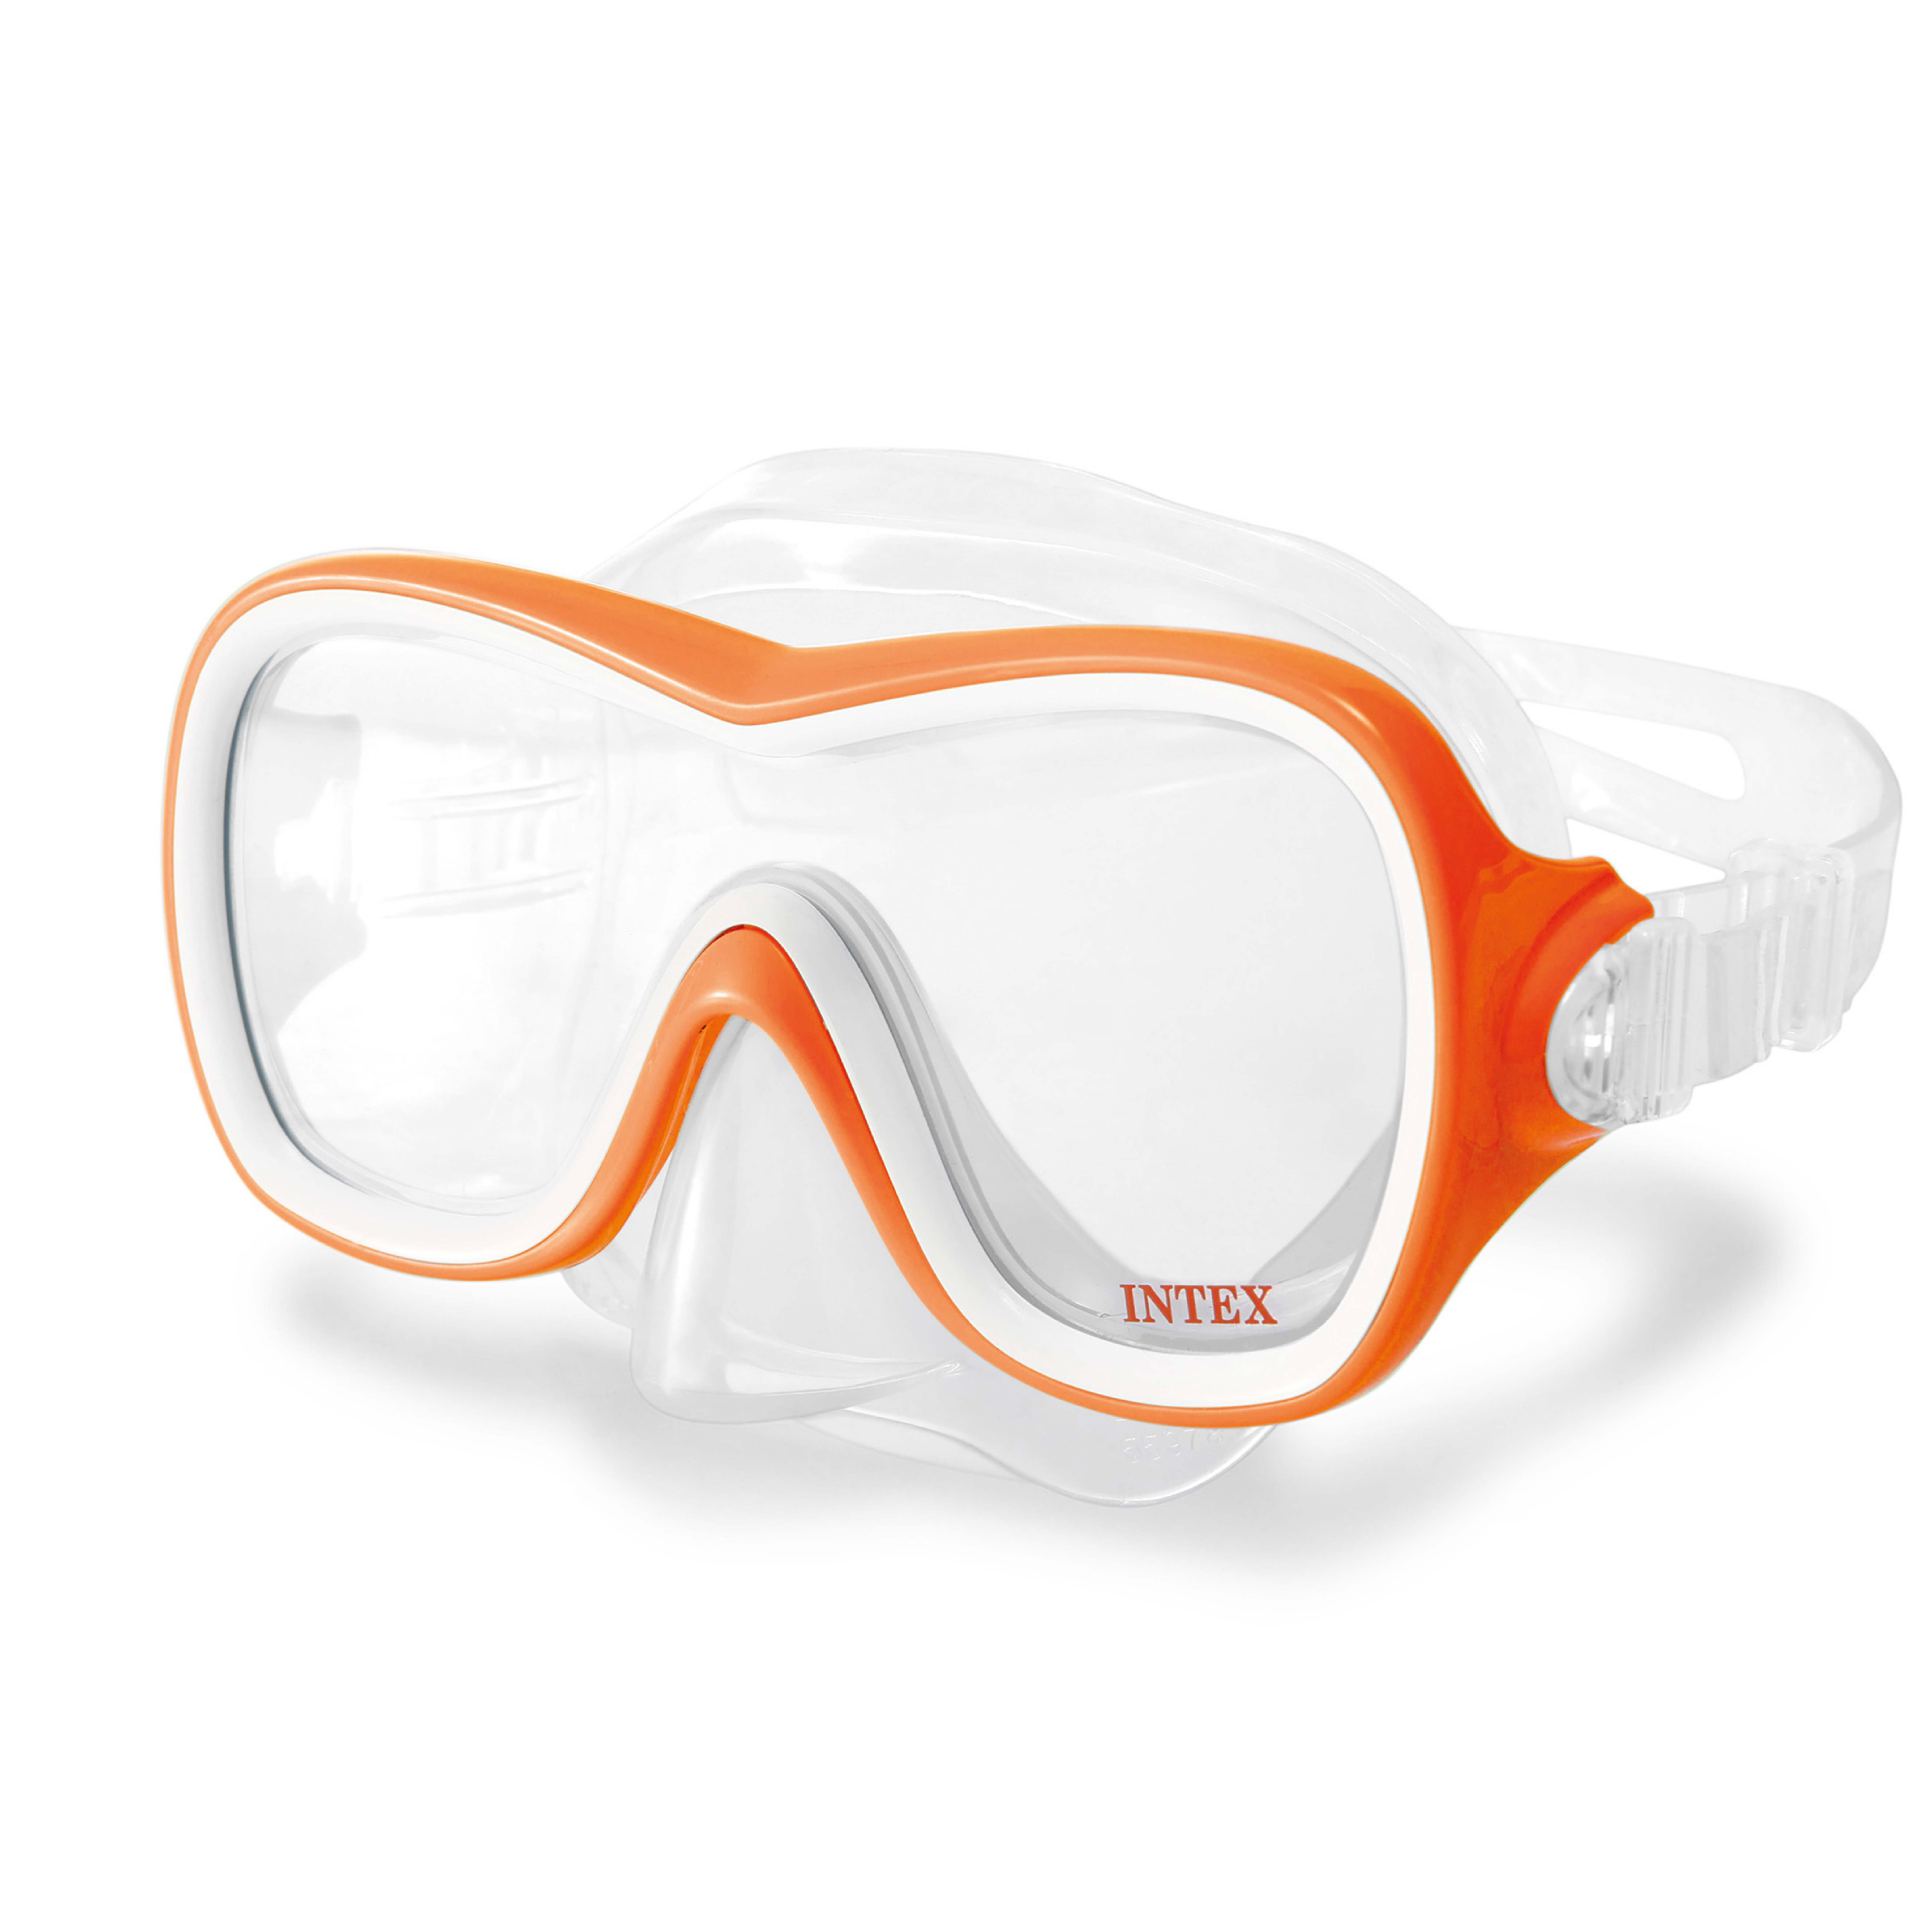 Intex wave rider masks - Oranje